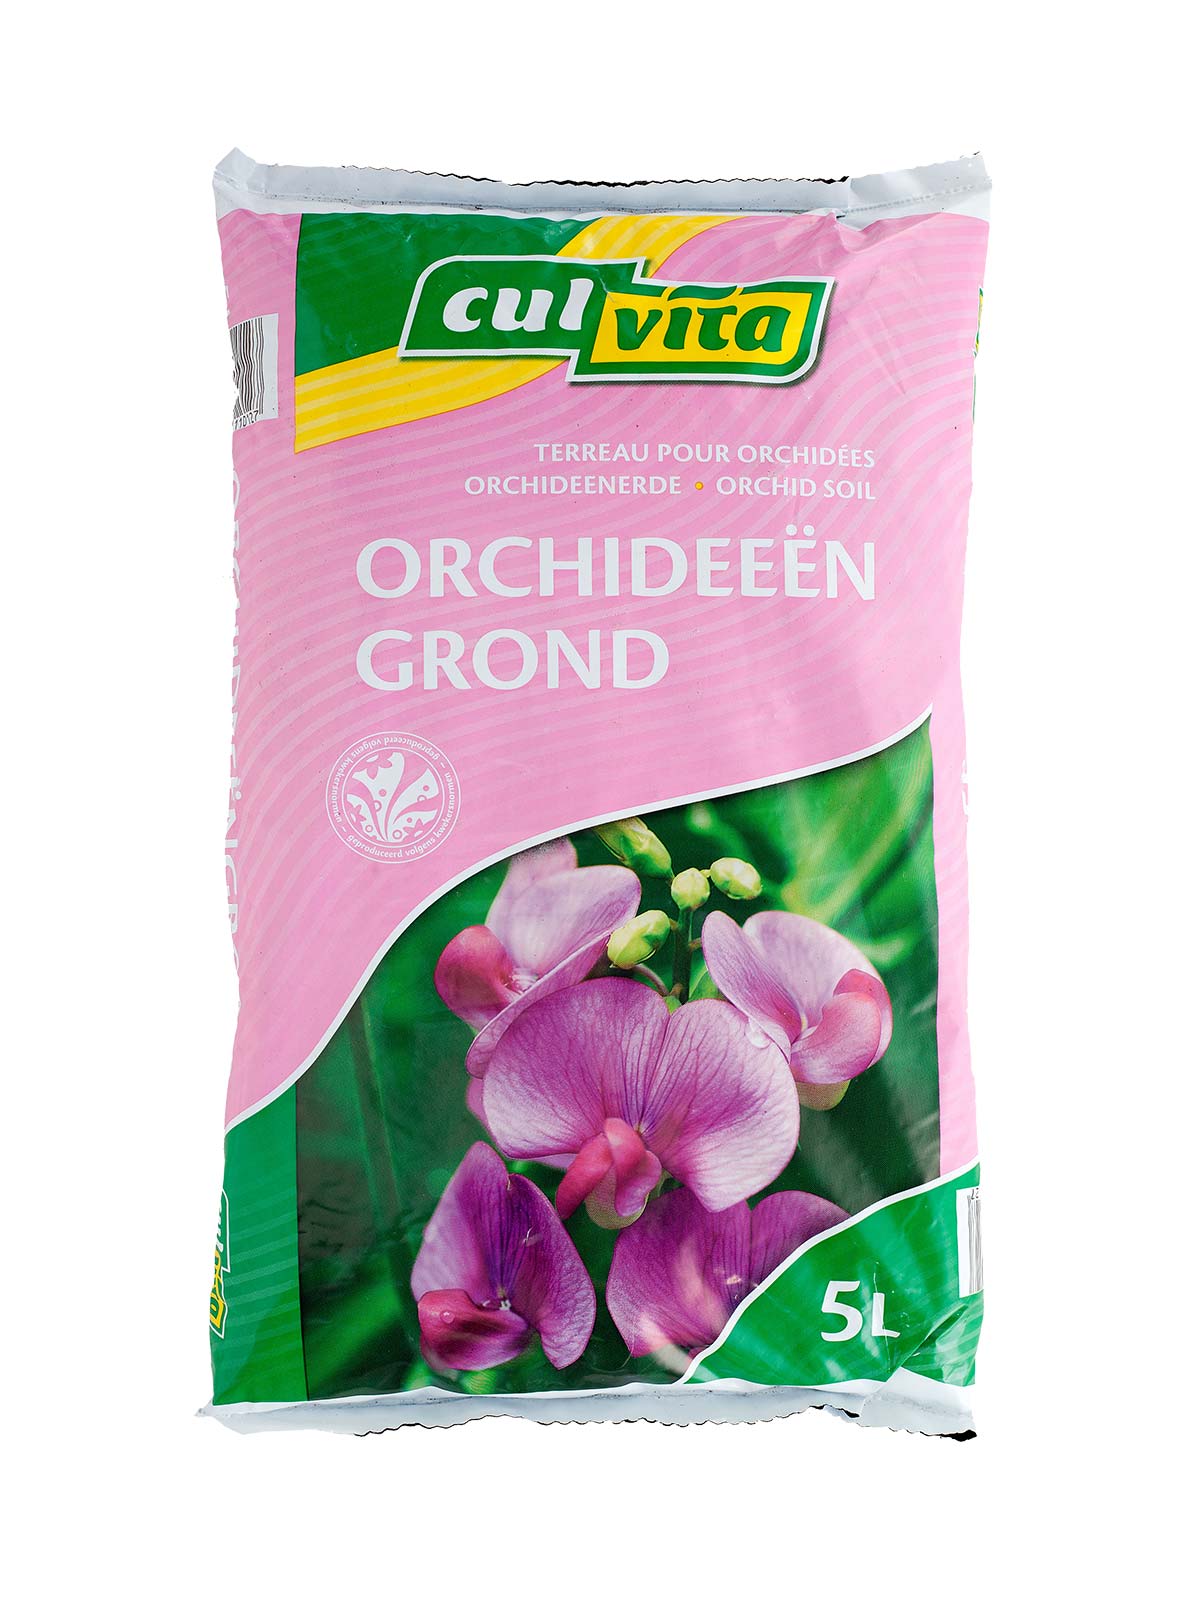 Culvita Orchideeëngrond